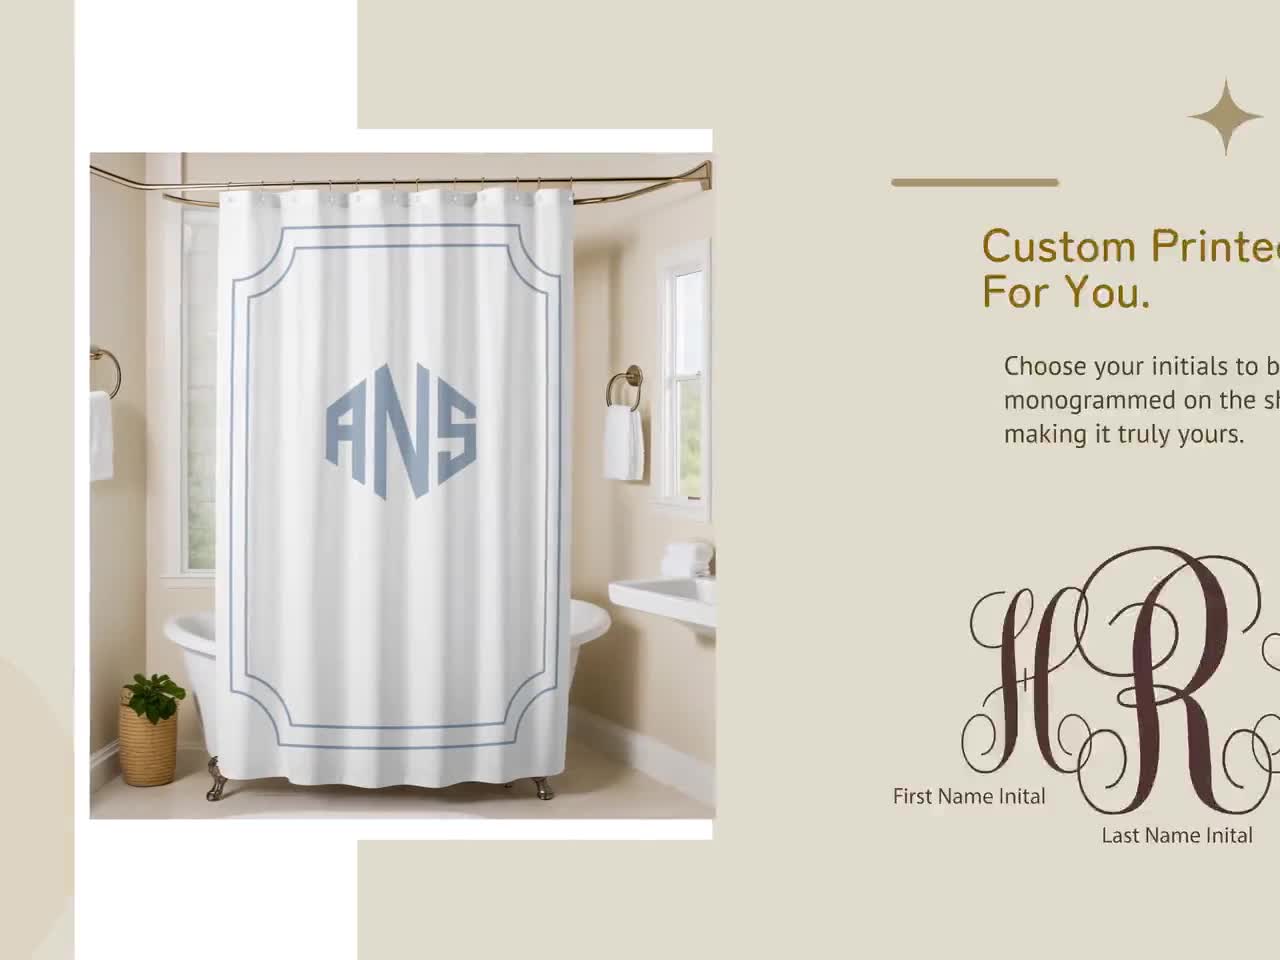 Louis Vuitton LV Monogram Bathroom Set Luxury Shower Curtain Bath